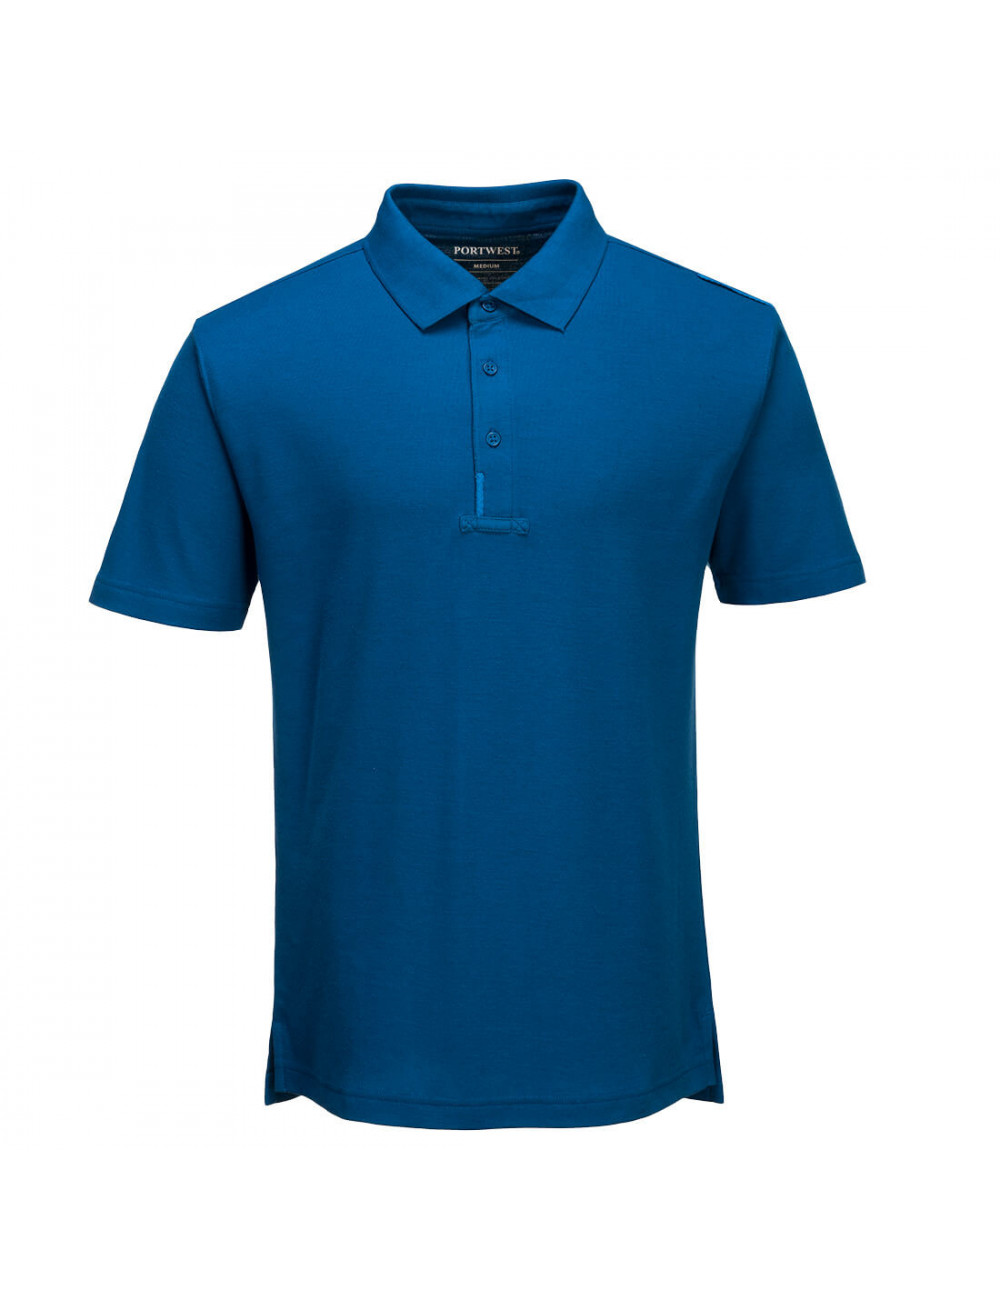 Polo shirt wx3 persian blue Portwest